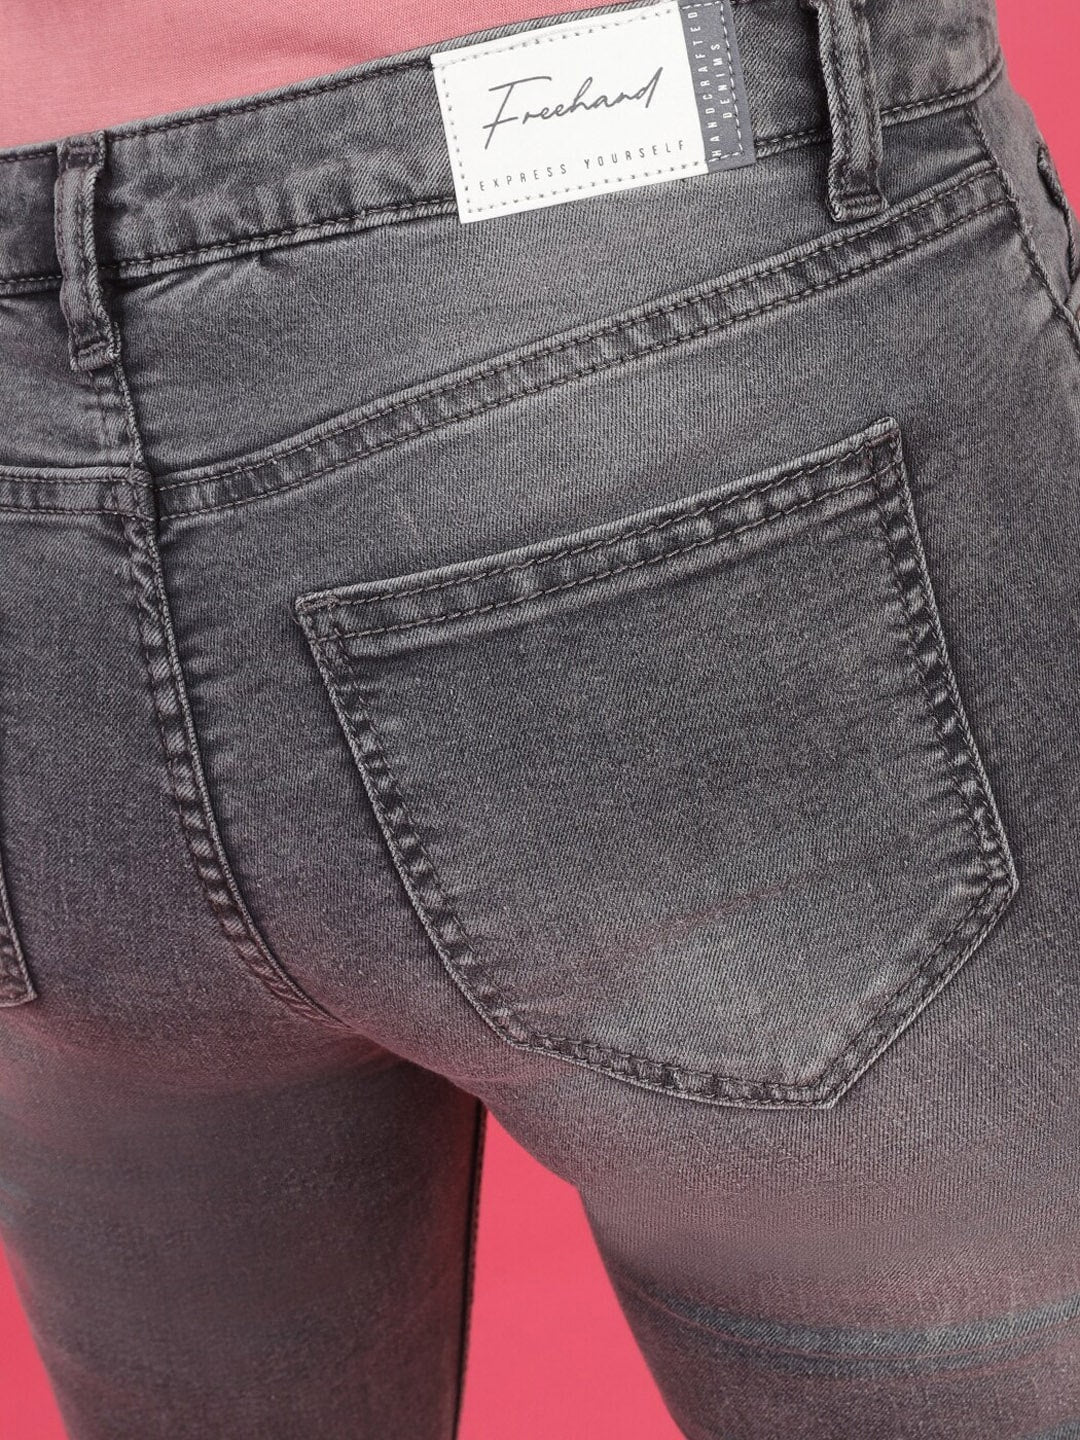 Shop Women Distressed Skinny Fit Jeans Online.